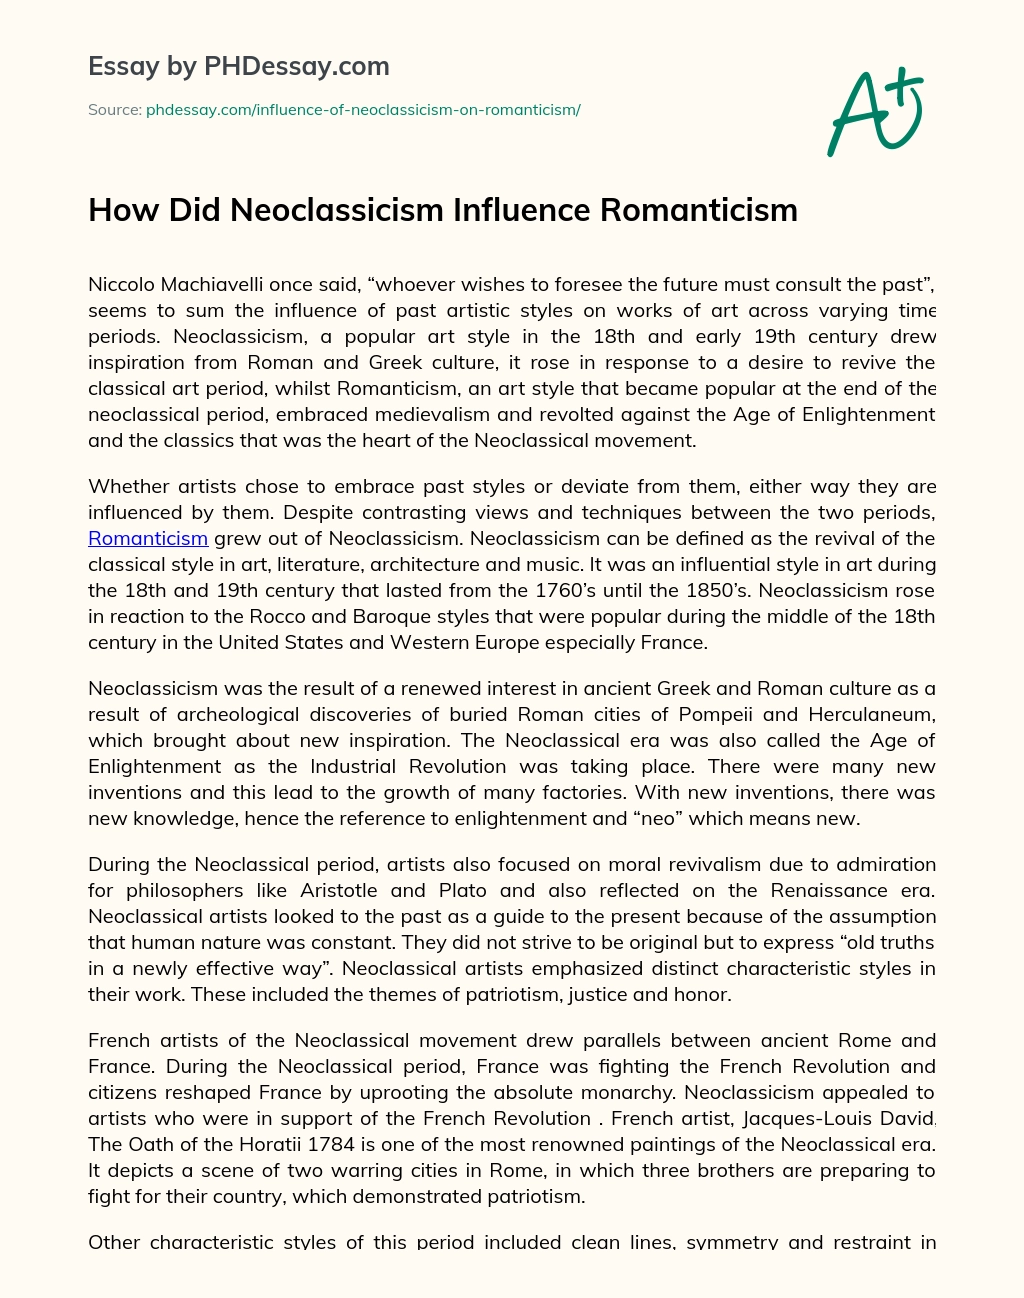 How Did Neoclassicism Influence Romanticism essay